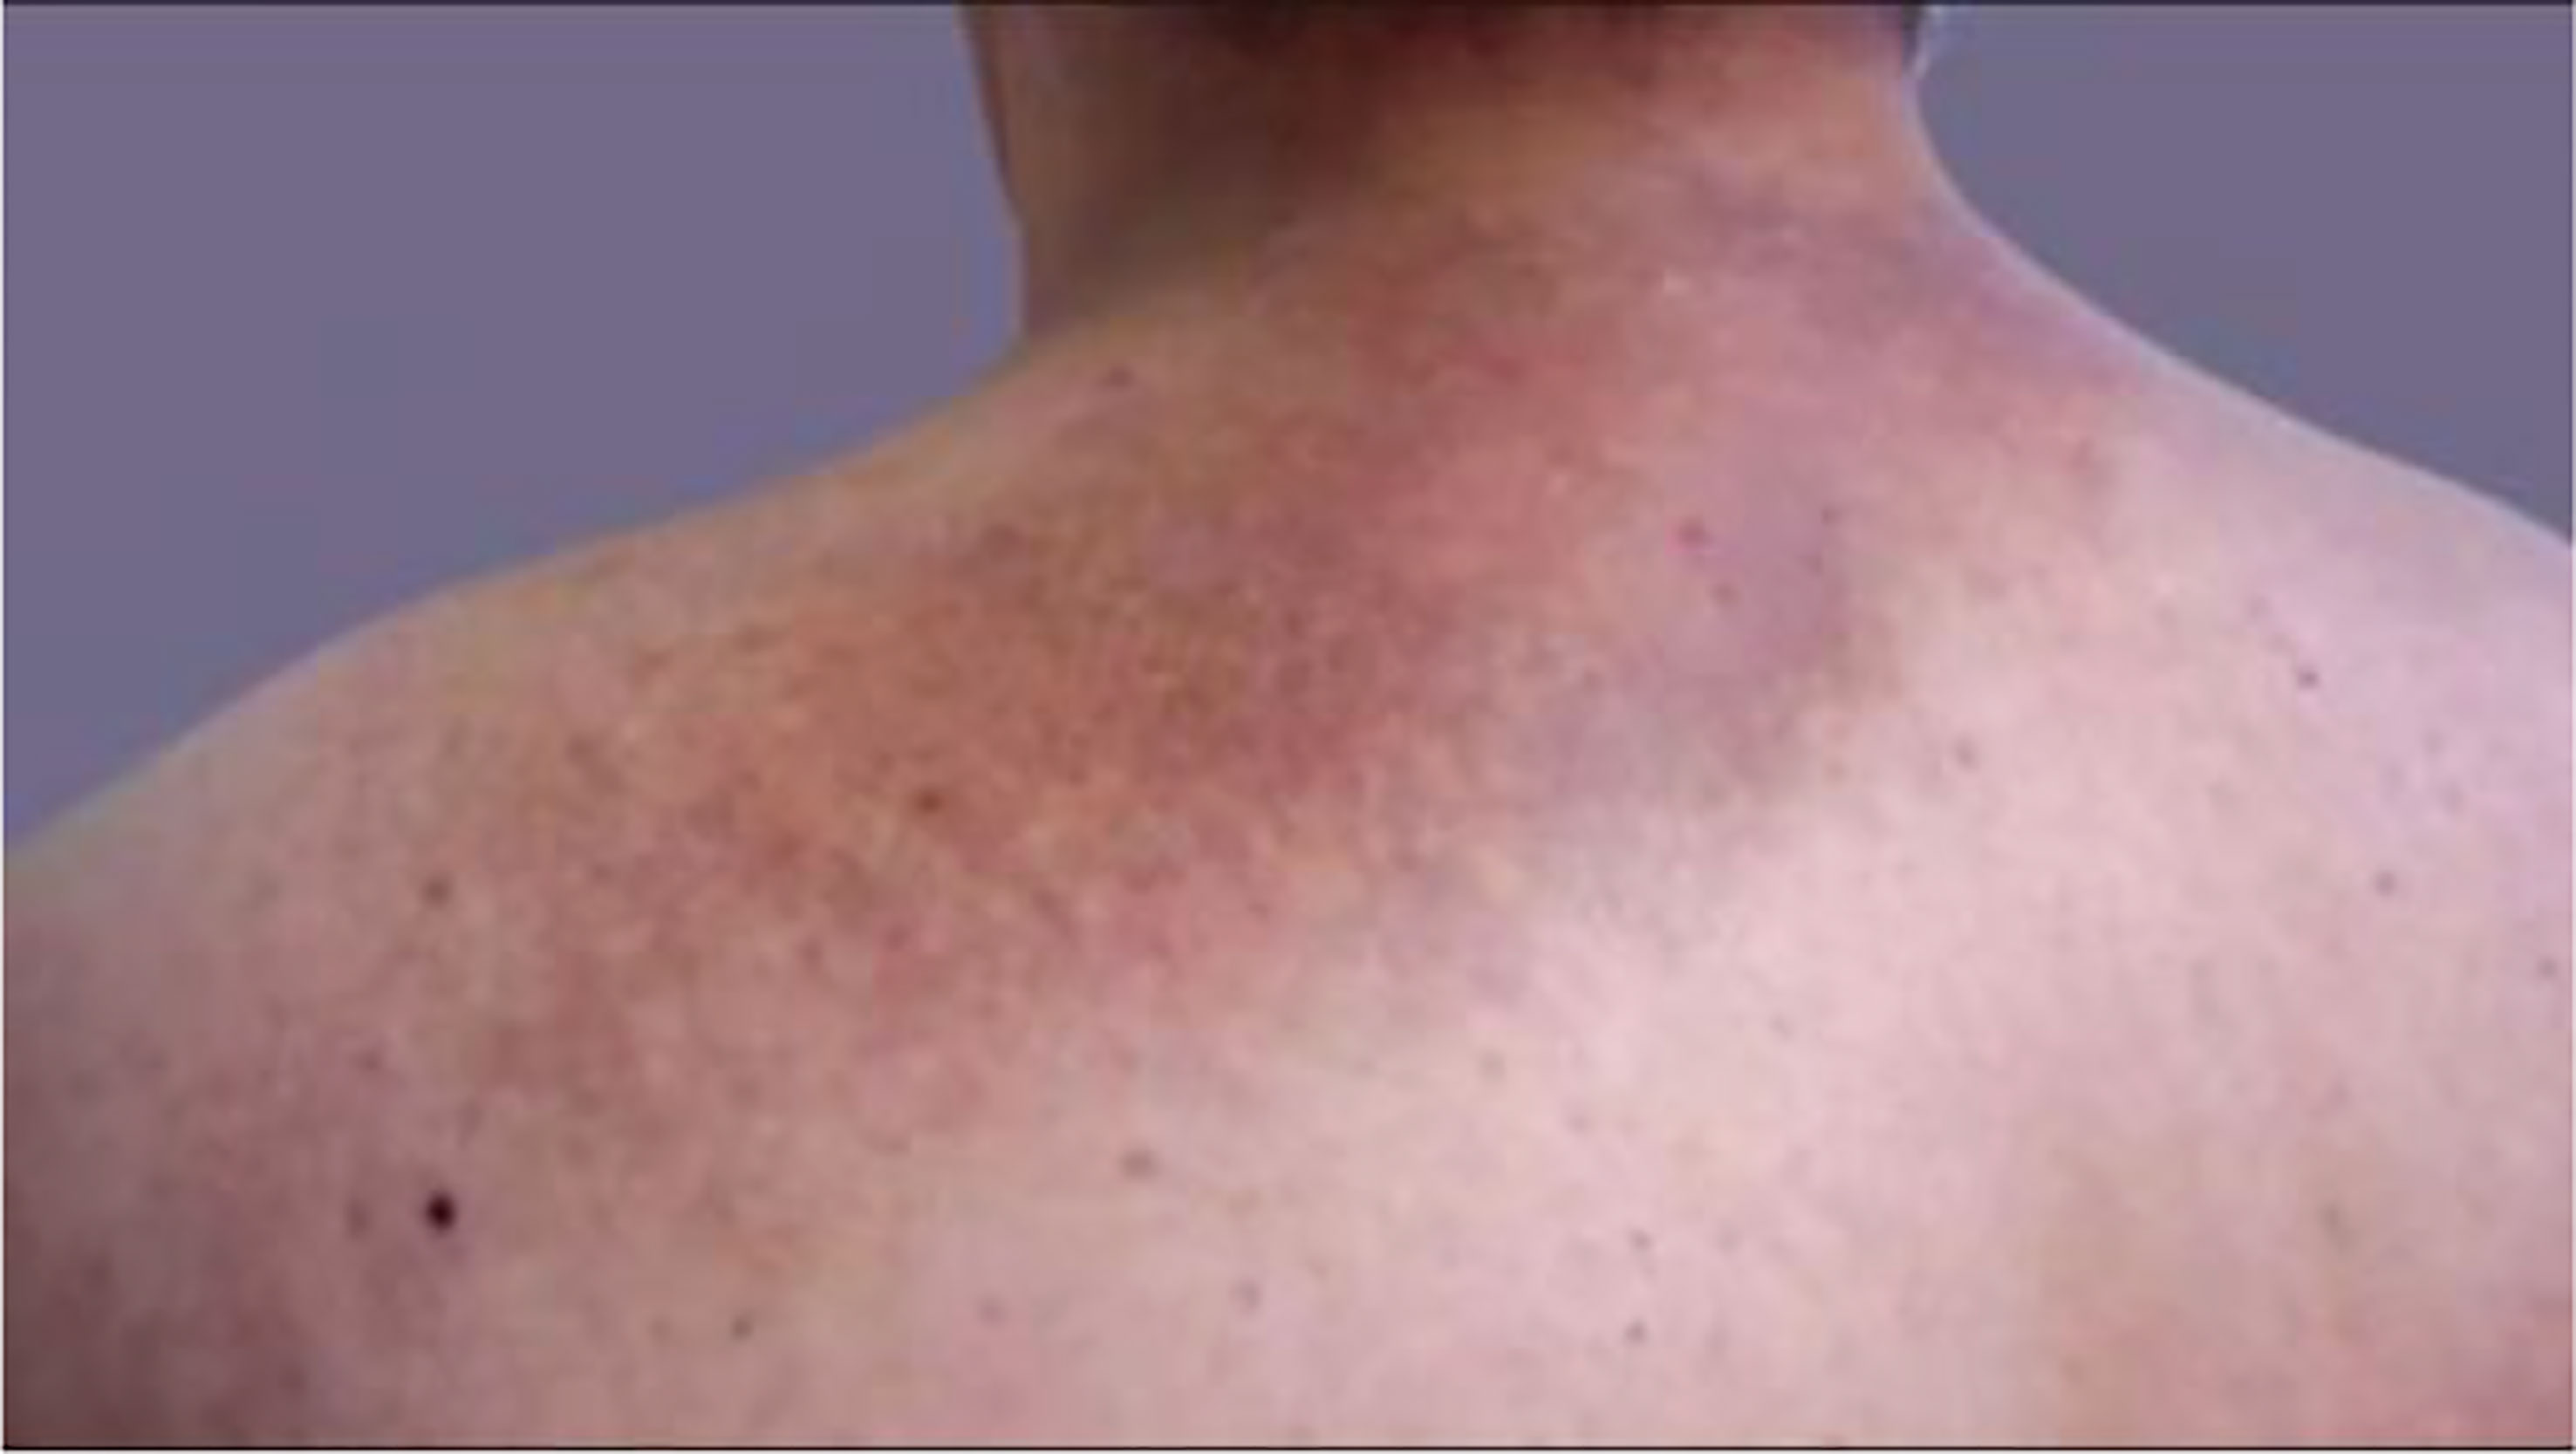 hypothyroidism skin rash